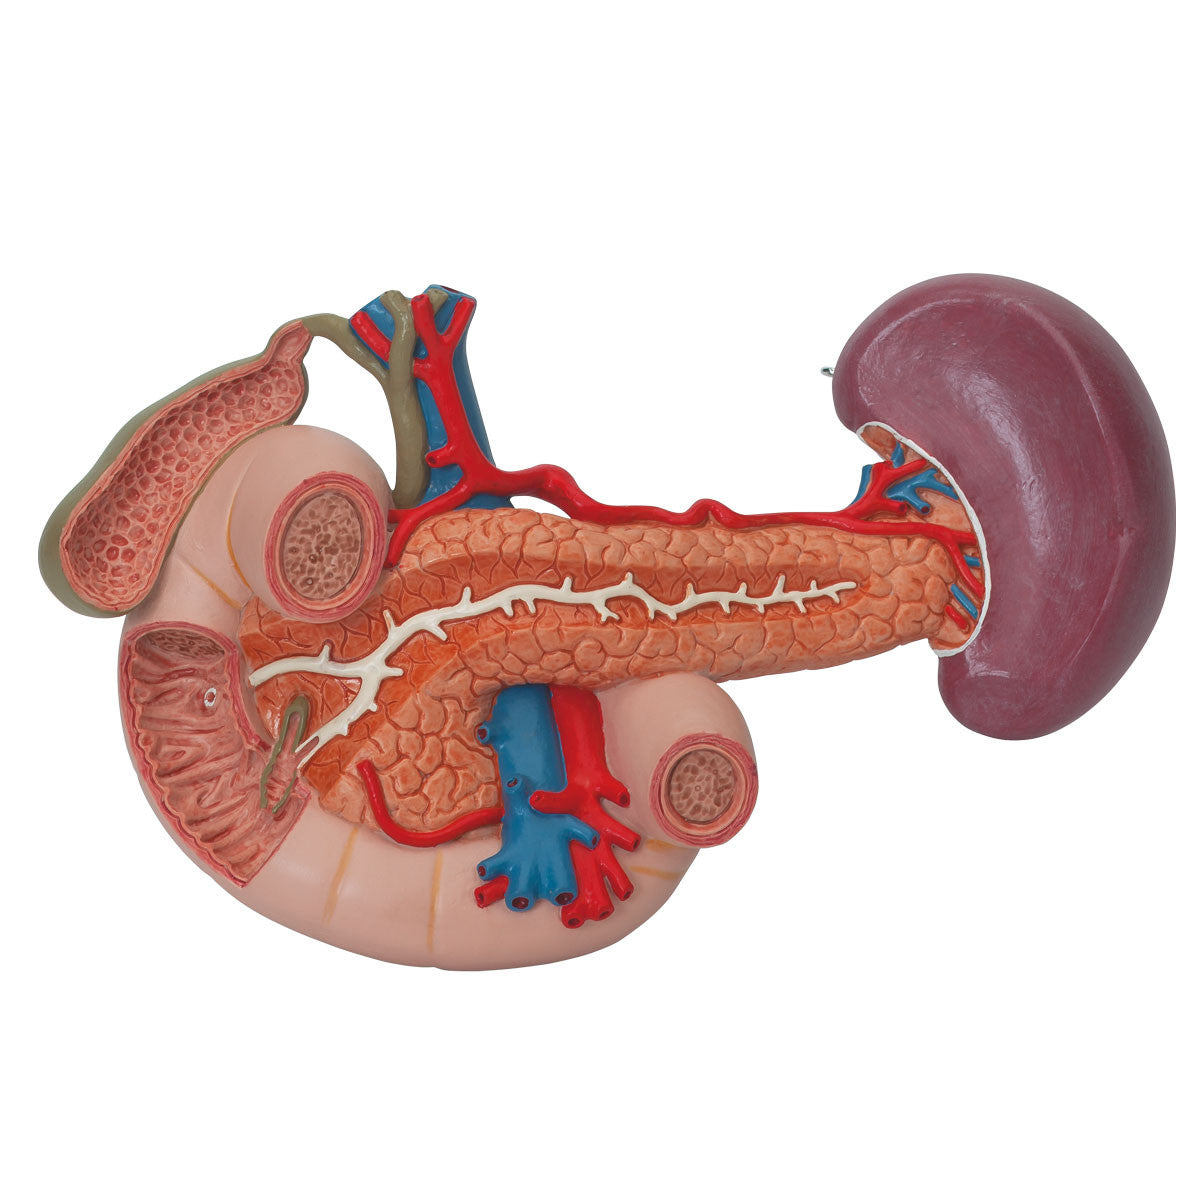 Kidney's with Rear Organs | 3B Scientific K22/3